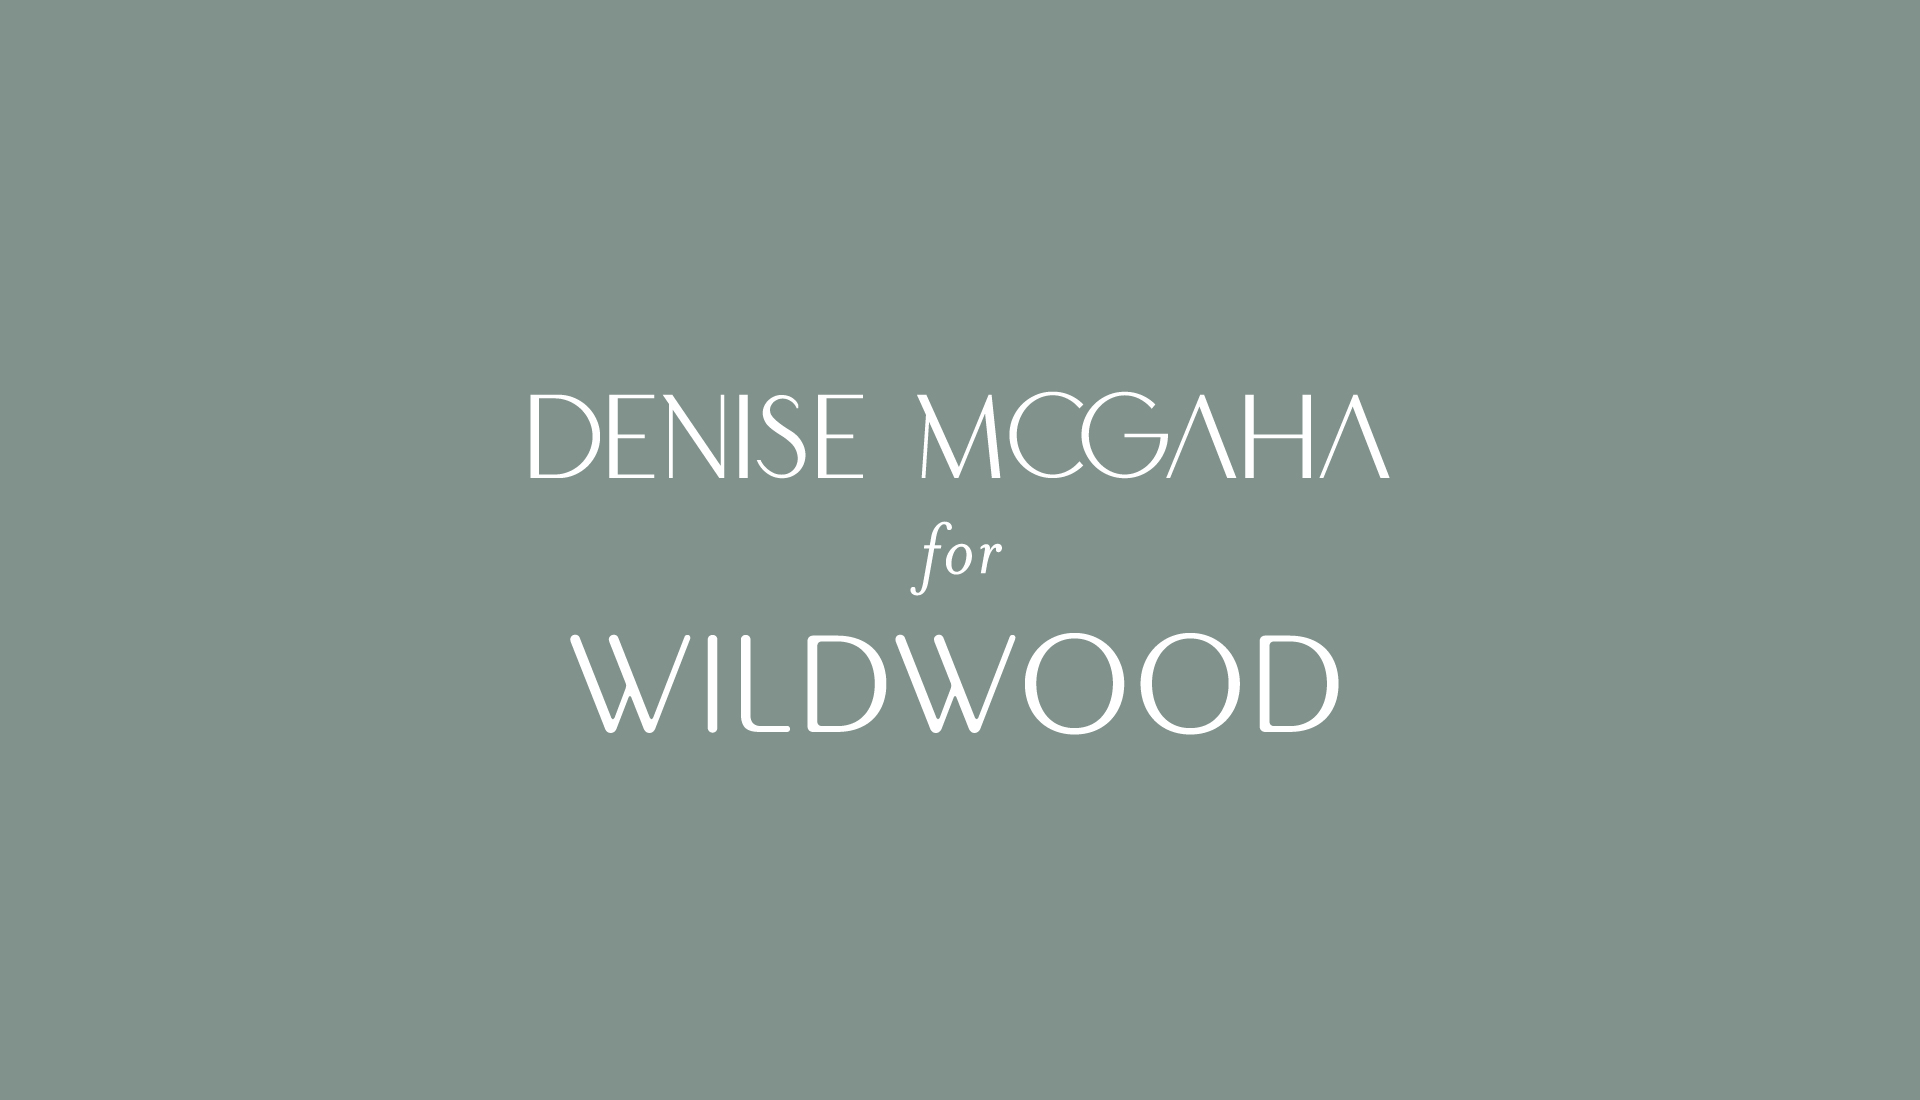 Lombardo - Wildwood Denise McGaha Luxury Home Advertising and Marketing Agency